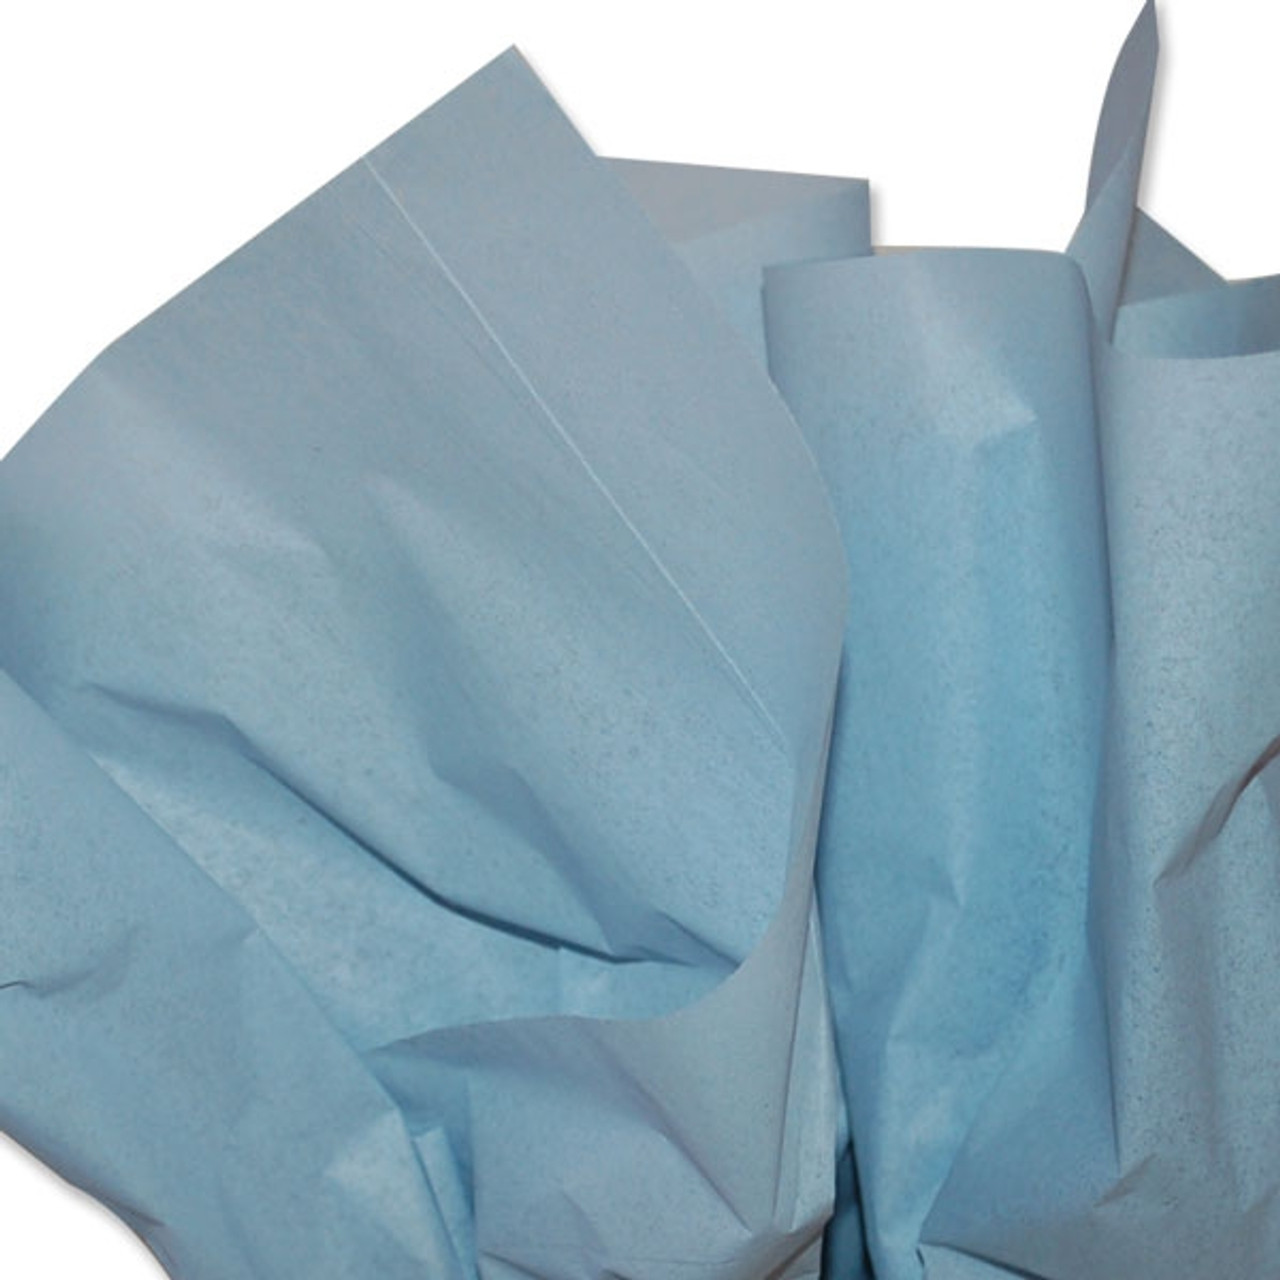 Colored Tissue - Antique Blue - 480 Sheets per Ream